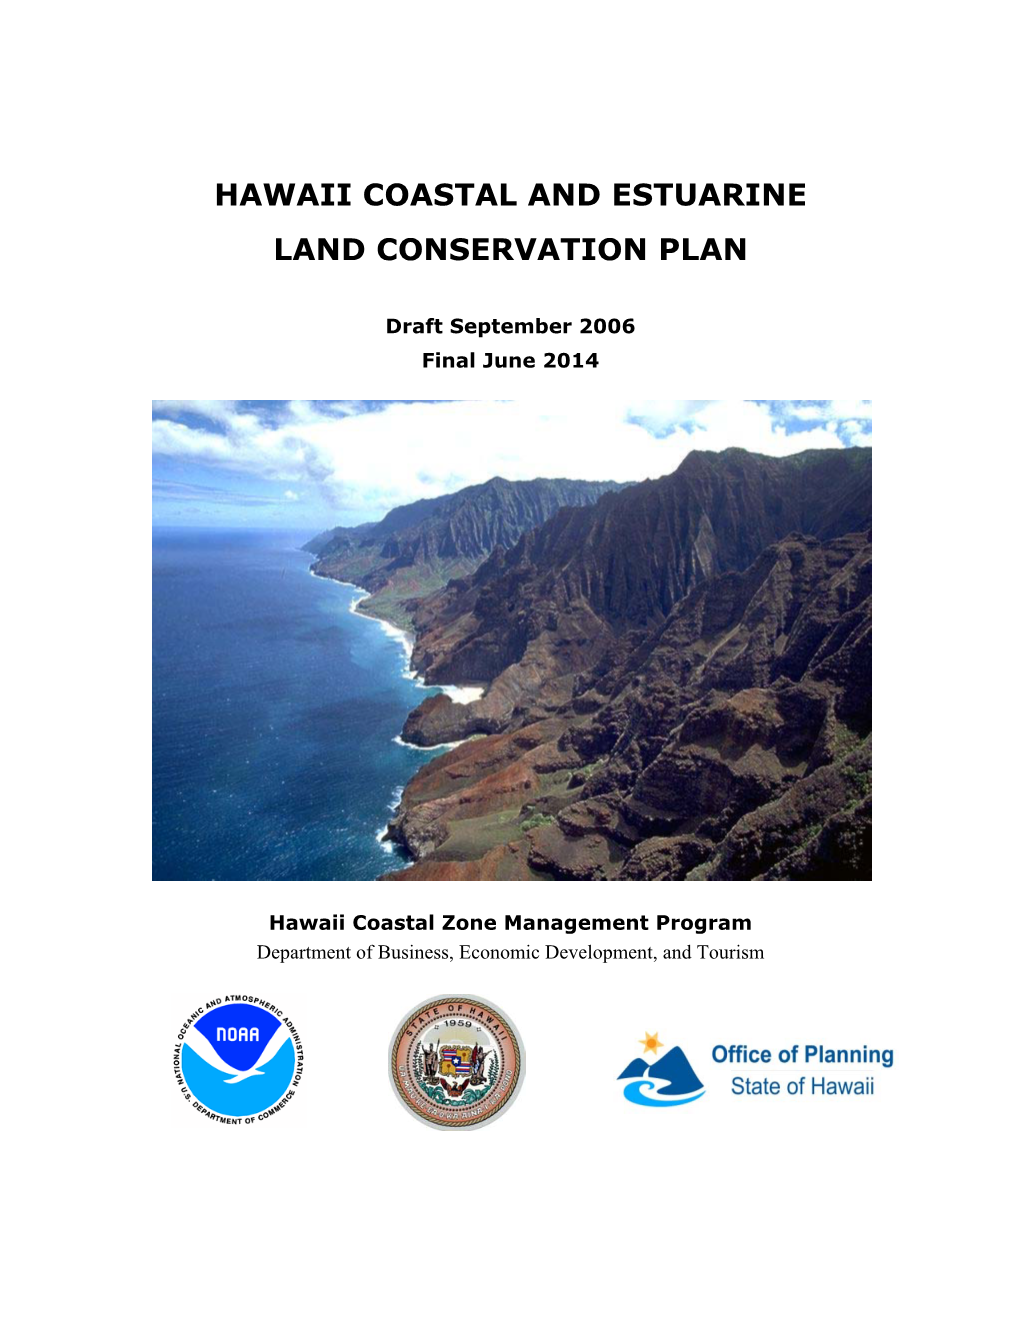 Hawaii Coastal and Estuarine Land Conservation Plan